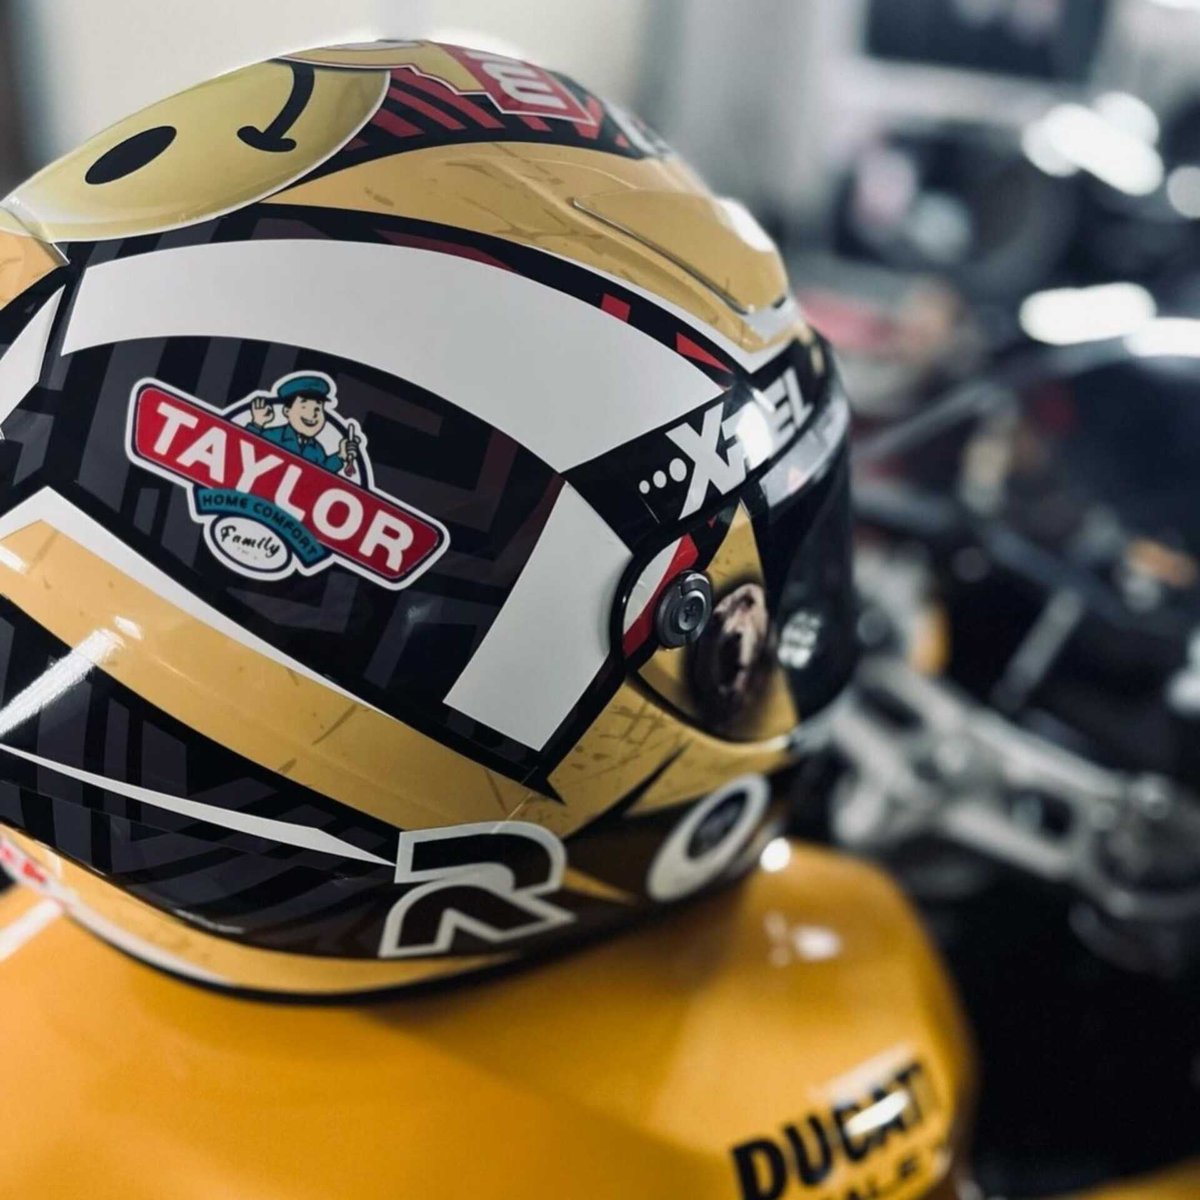 Kayla Yaakov's golden new look for Daytona! 🔥 #MotoAmerica | #Supersport | #Daytona200 | #Helmet | #motorcycle 📸 repost @KaylaYaakov